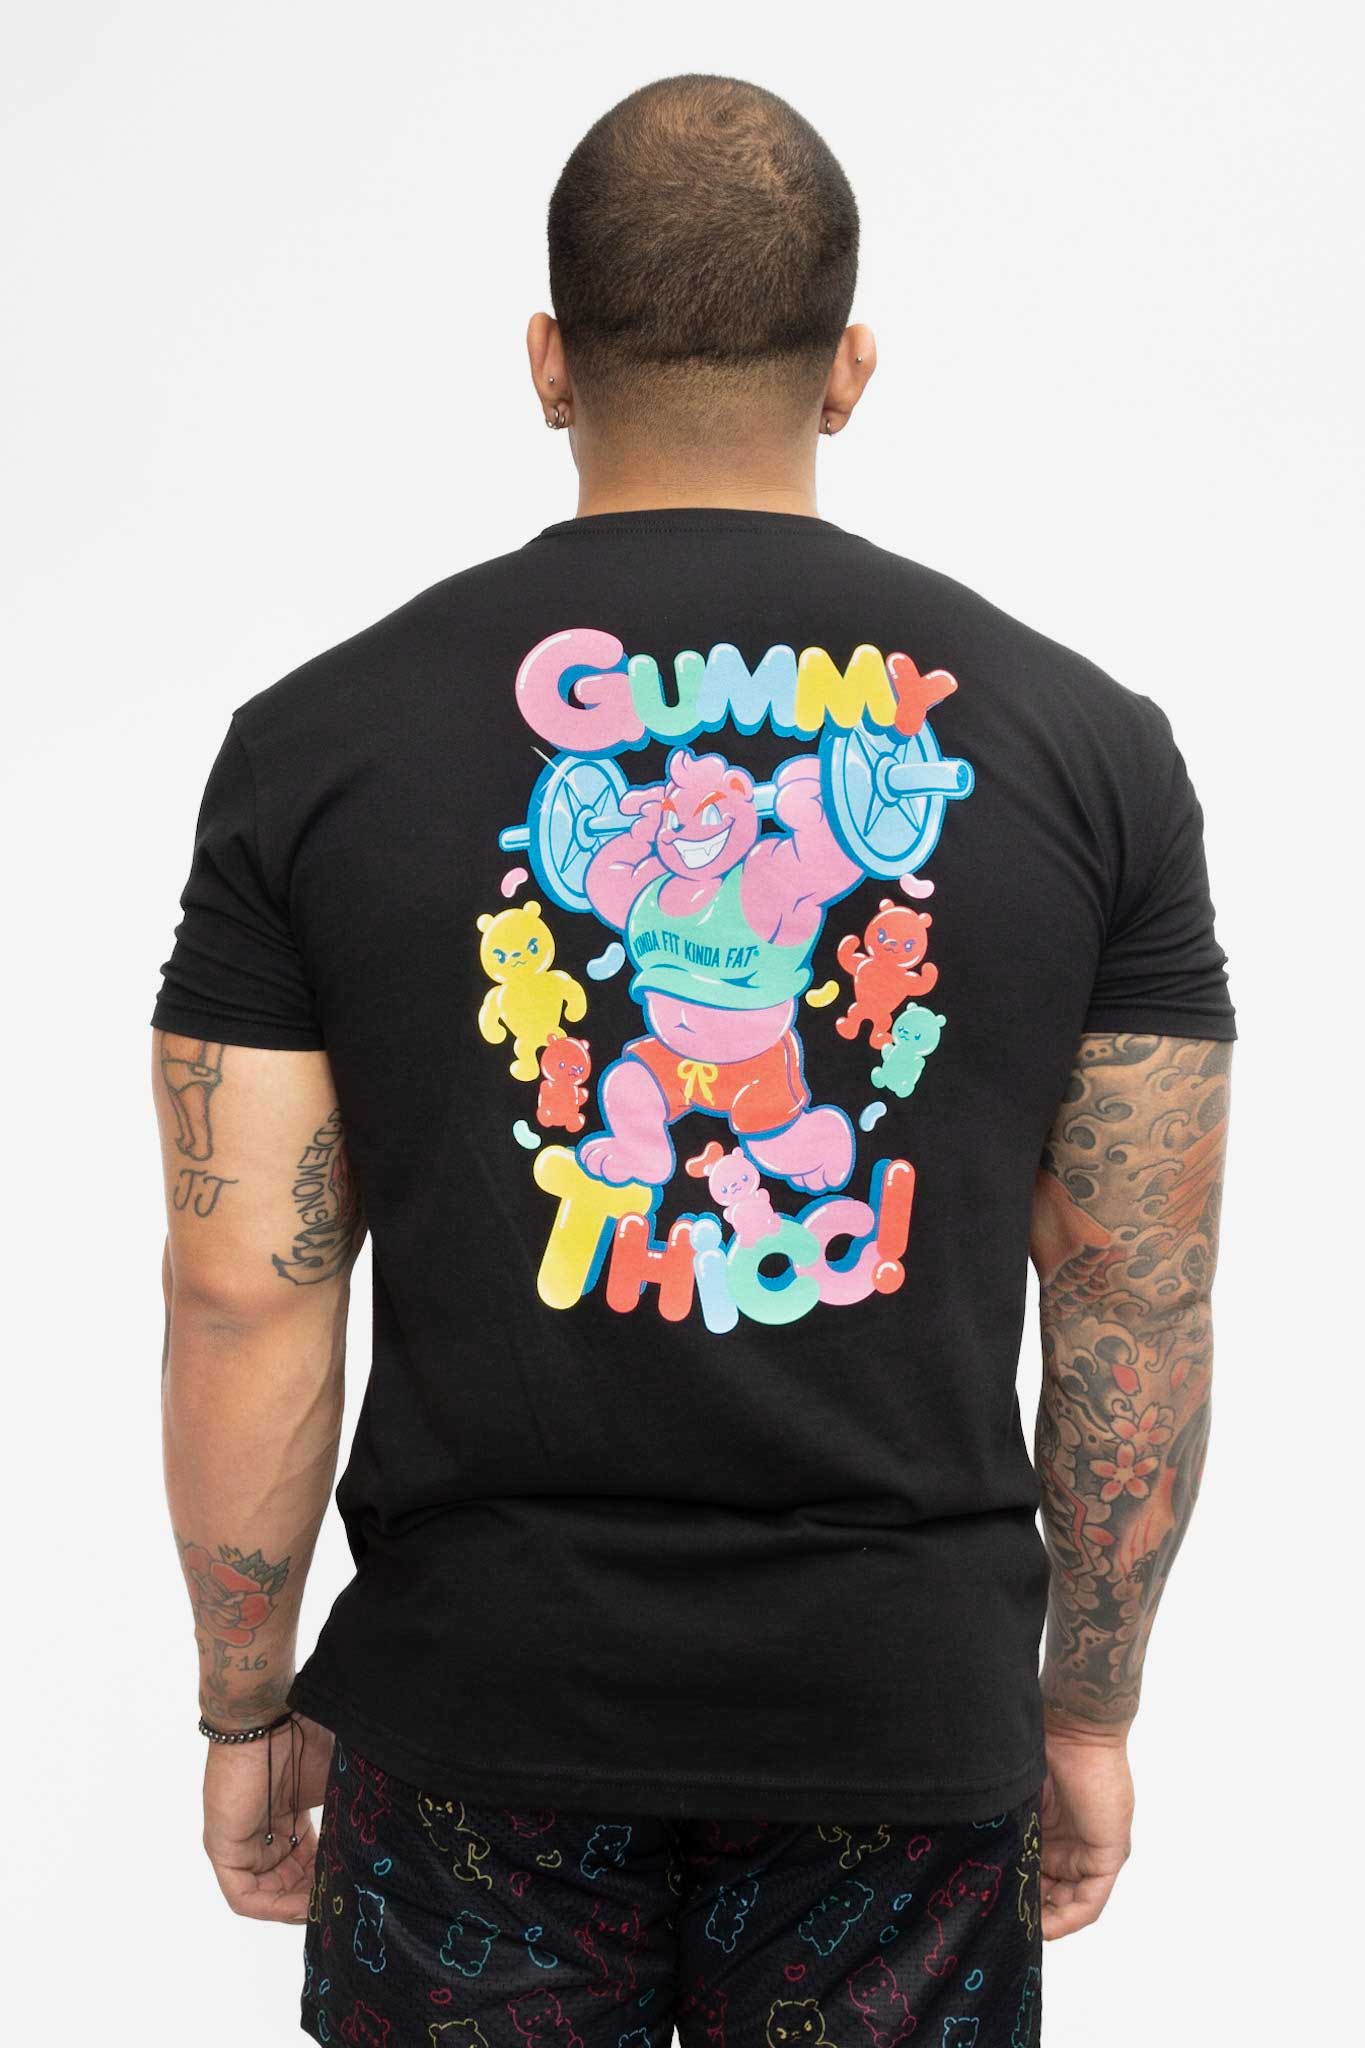 Gummy Thicc Shirt – Kinda Fit Kinda Fat